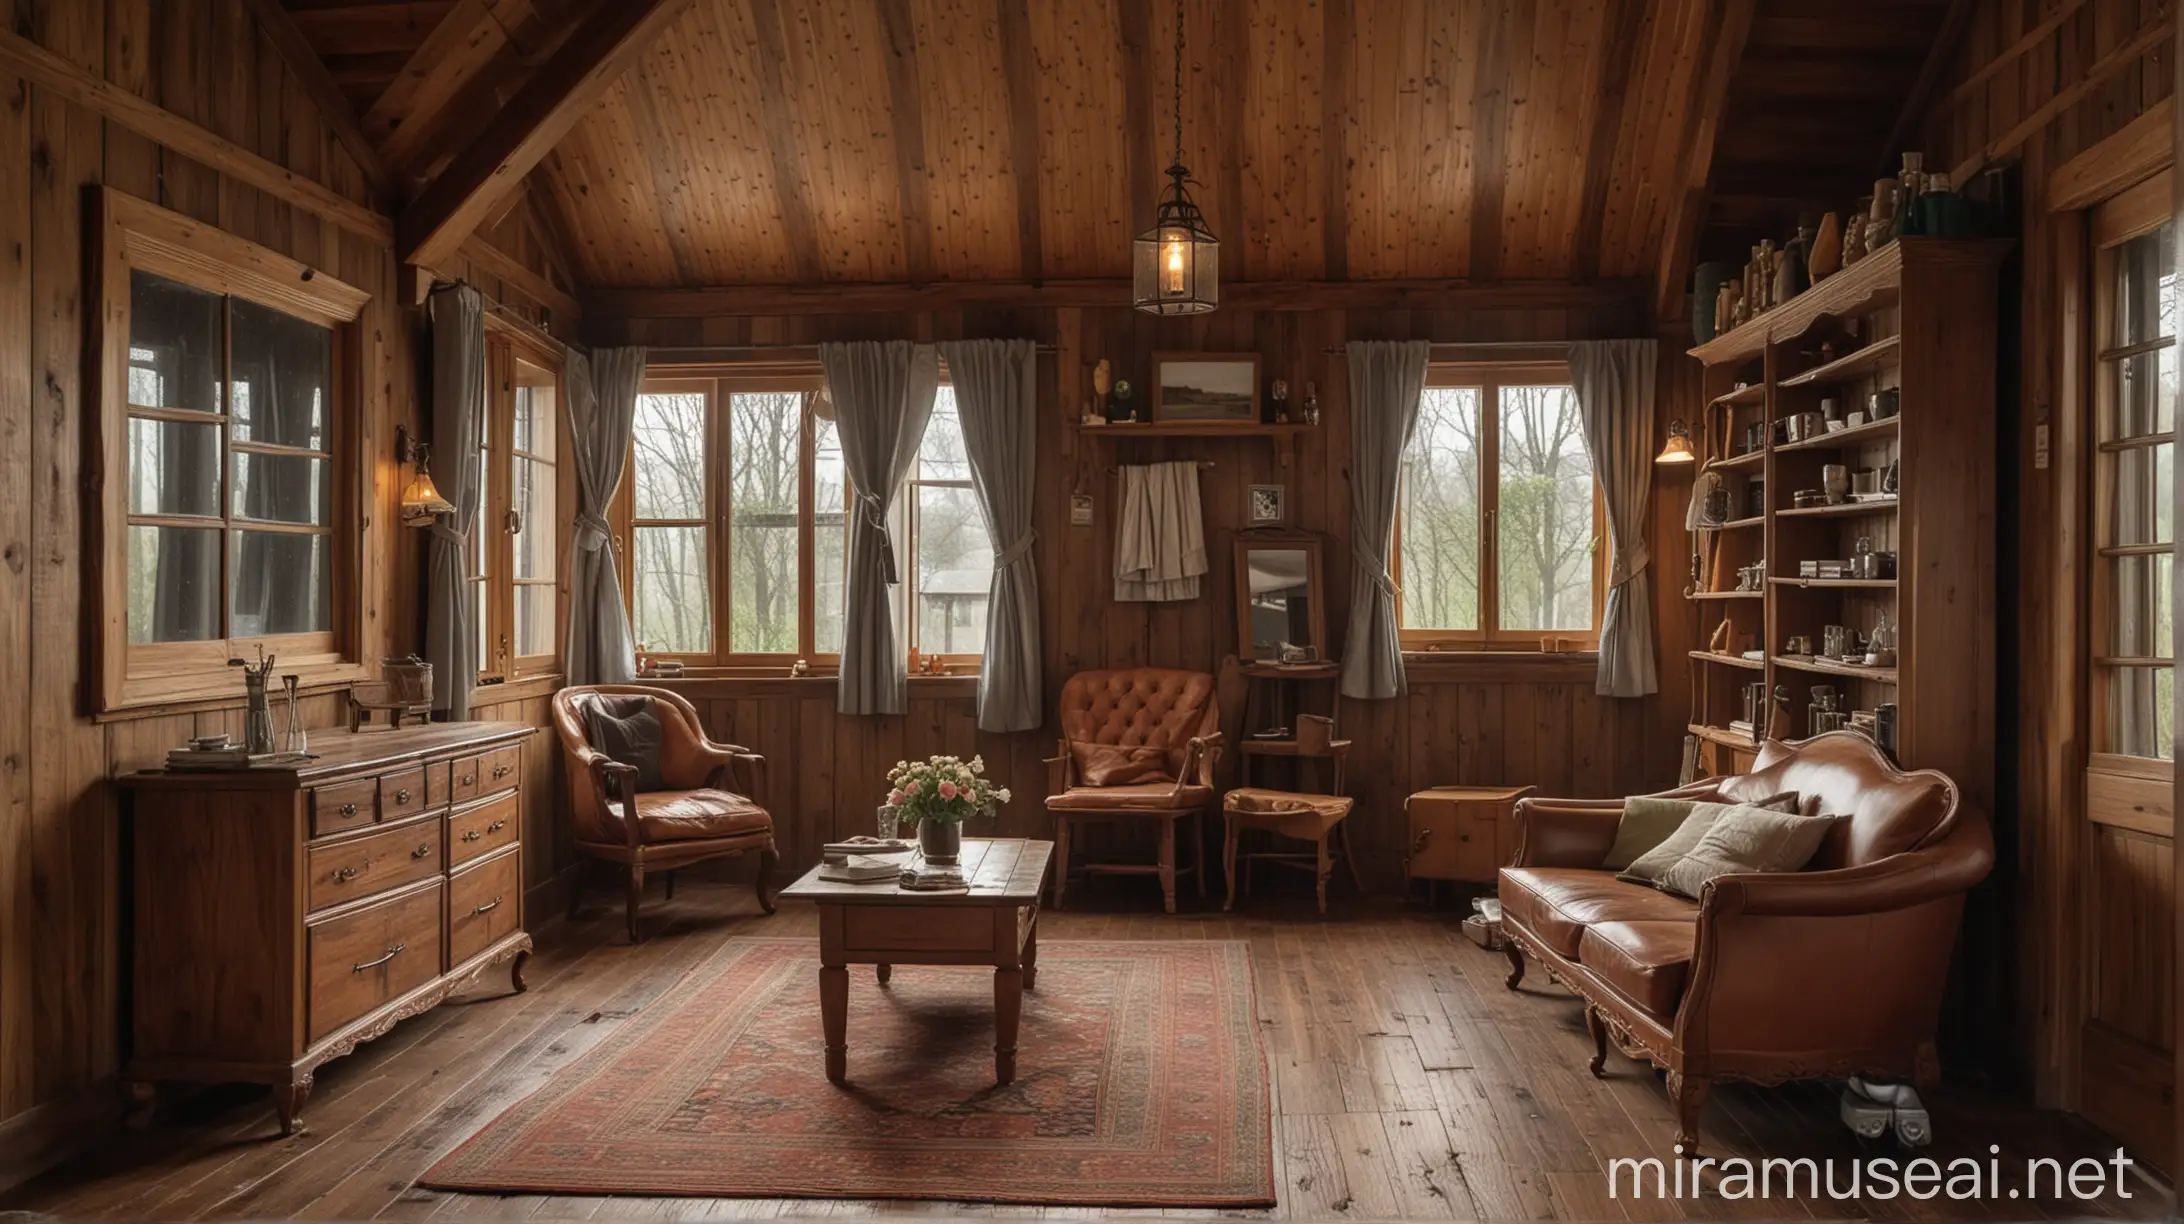 Cozy Wooden House Interior in Rainy Weather